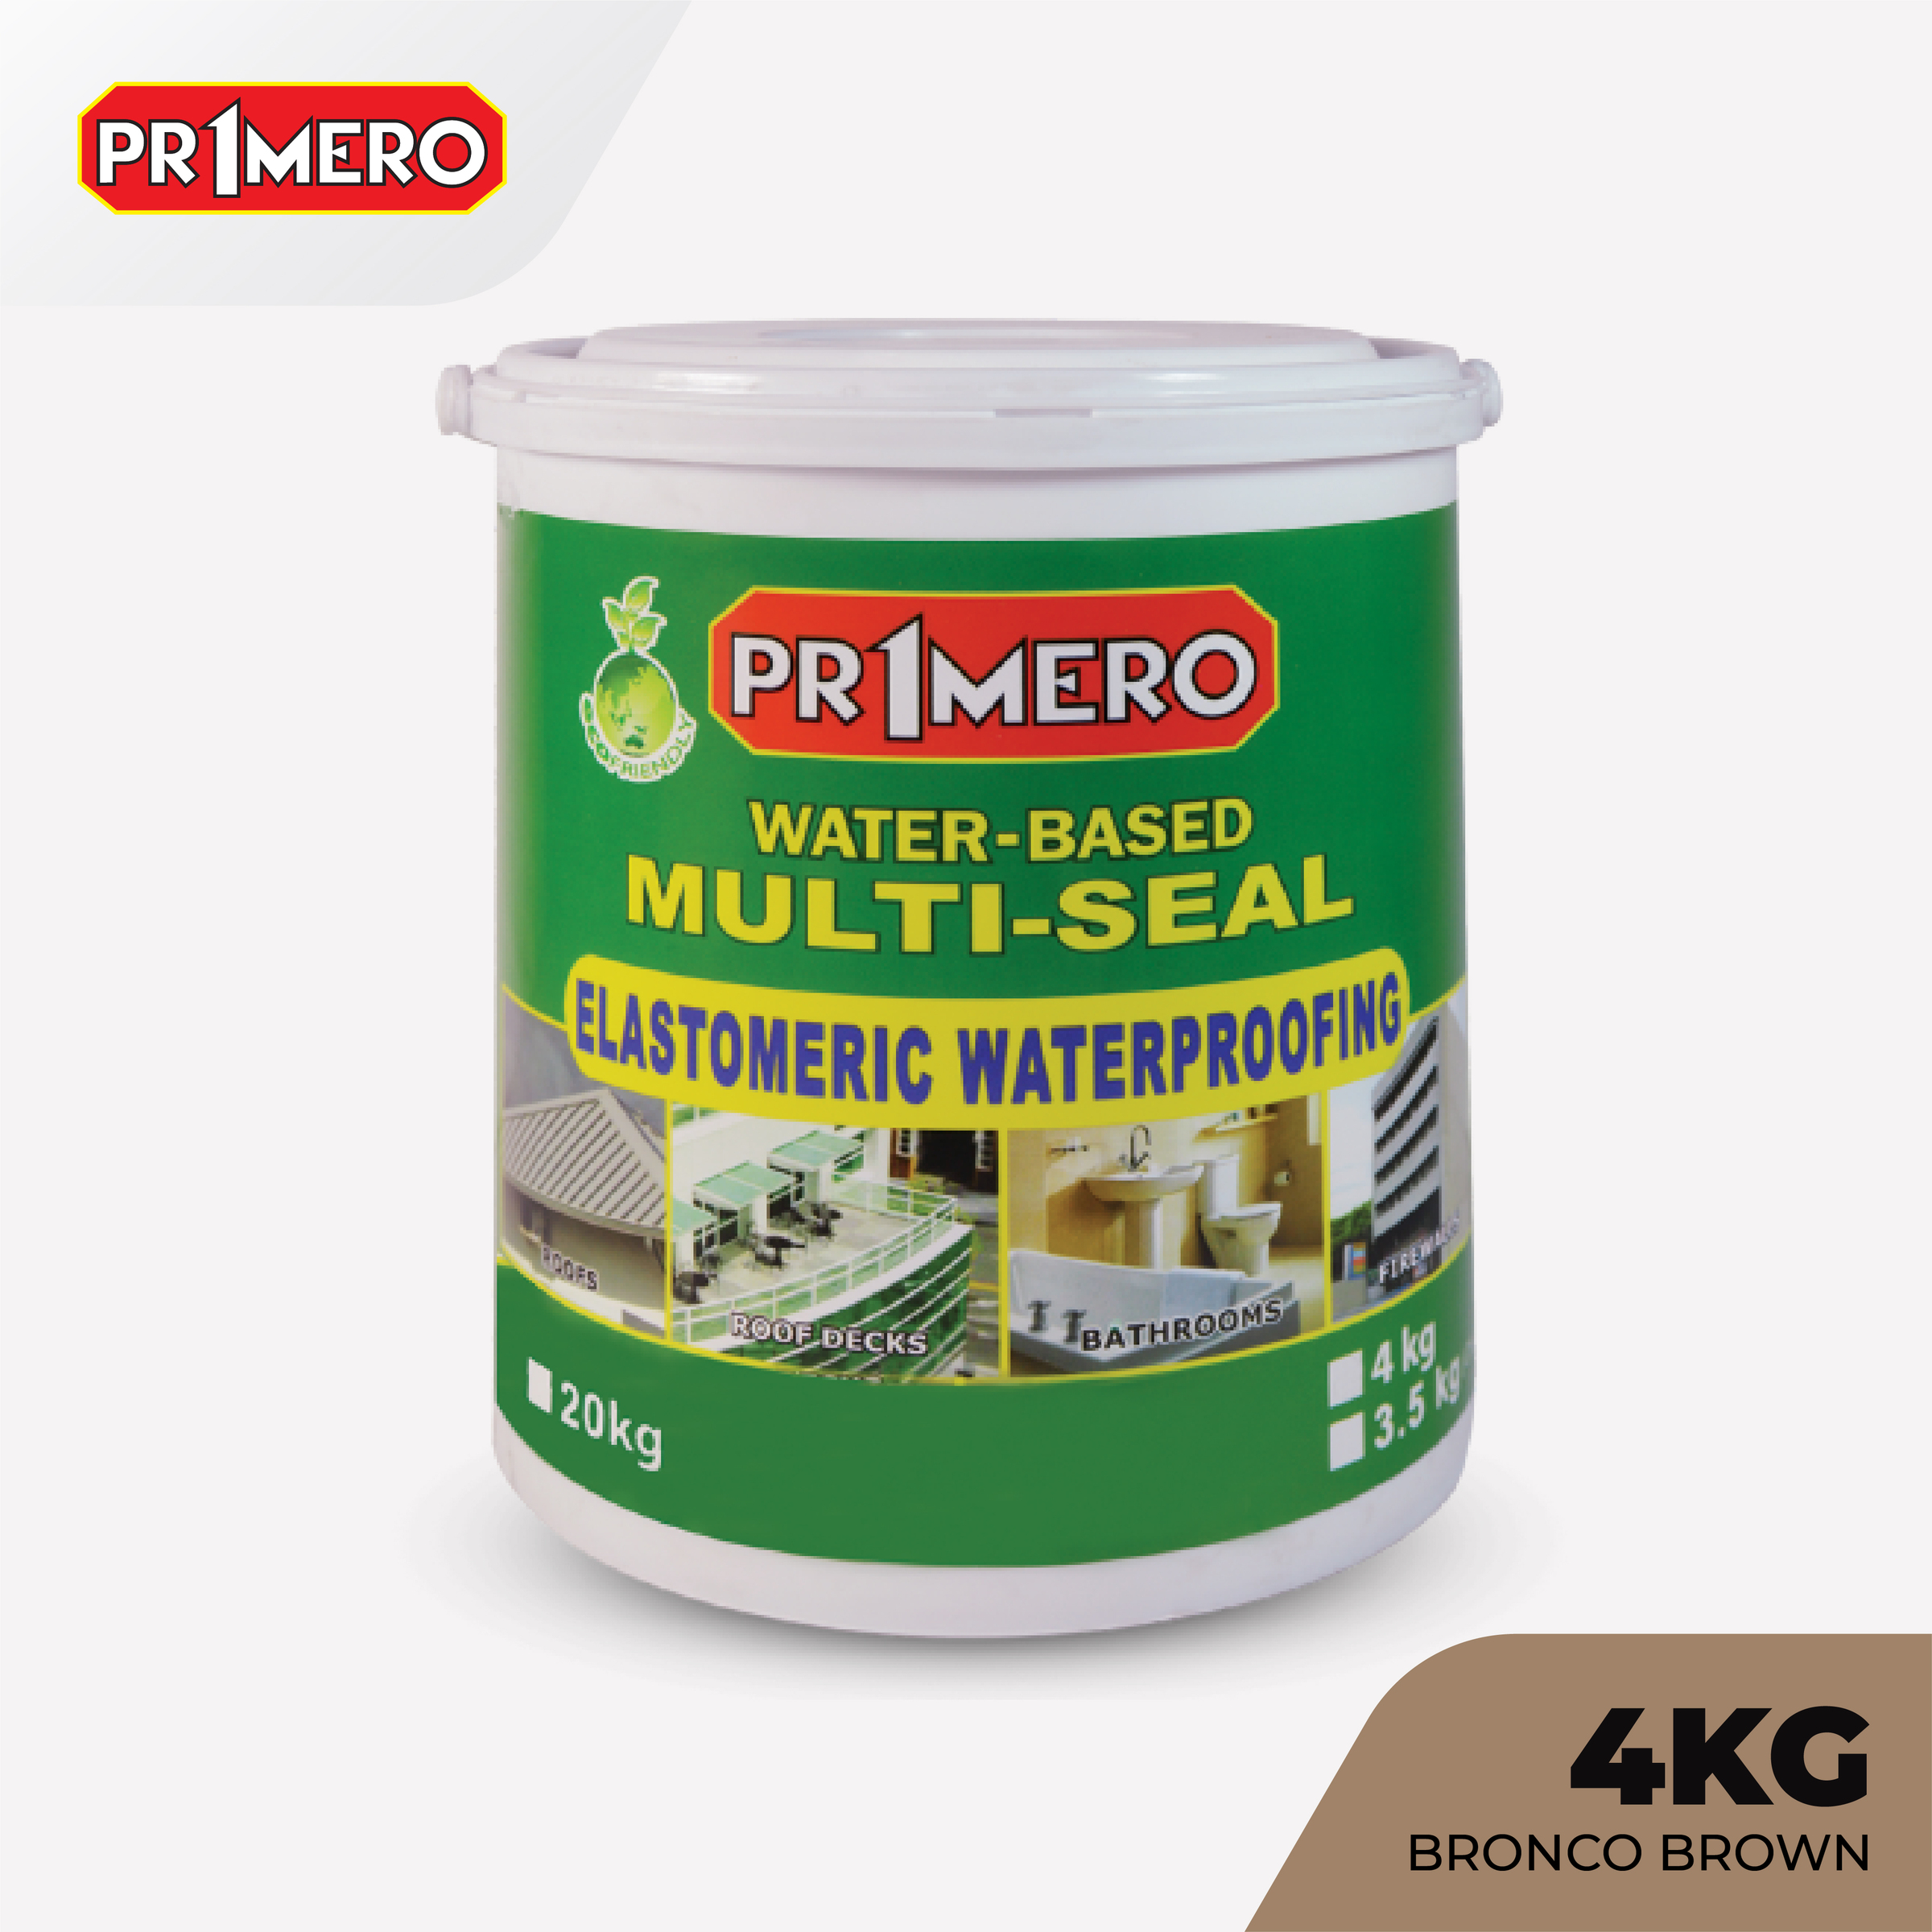 Primero Multi-Seal Elastomeric Waterproofing Sealant Bronco Brown - 4Kg